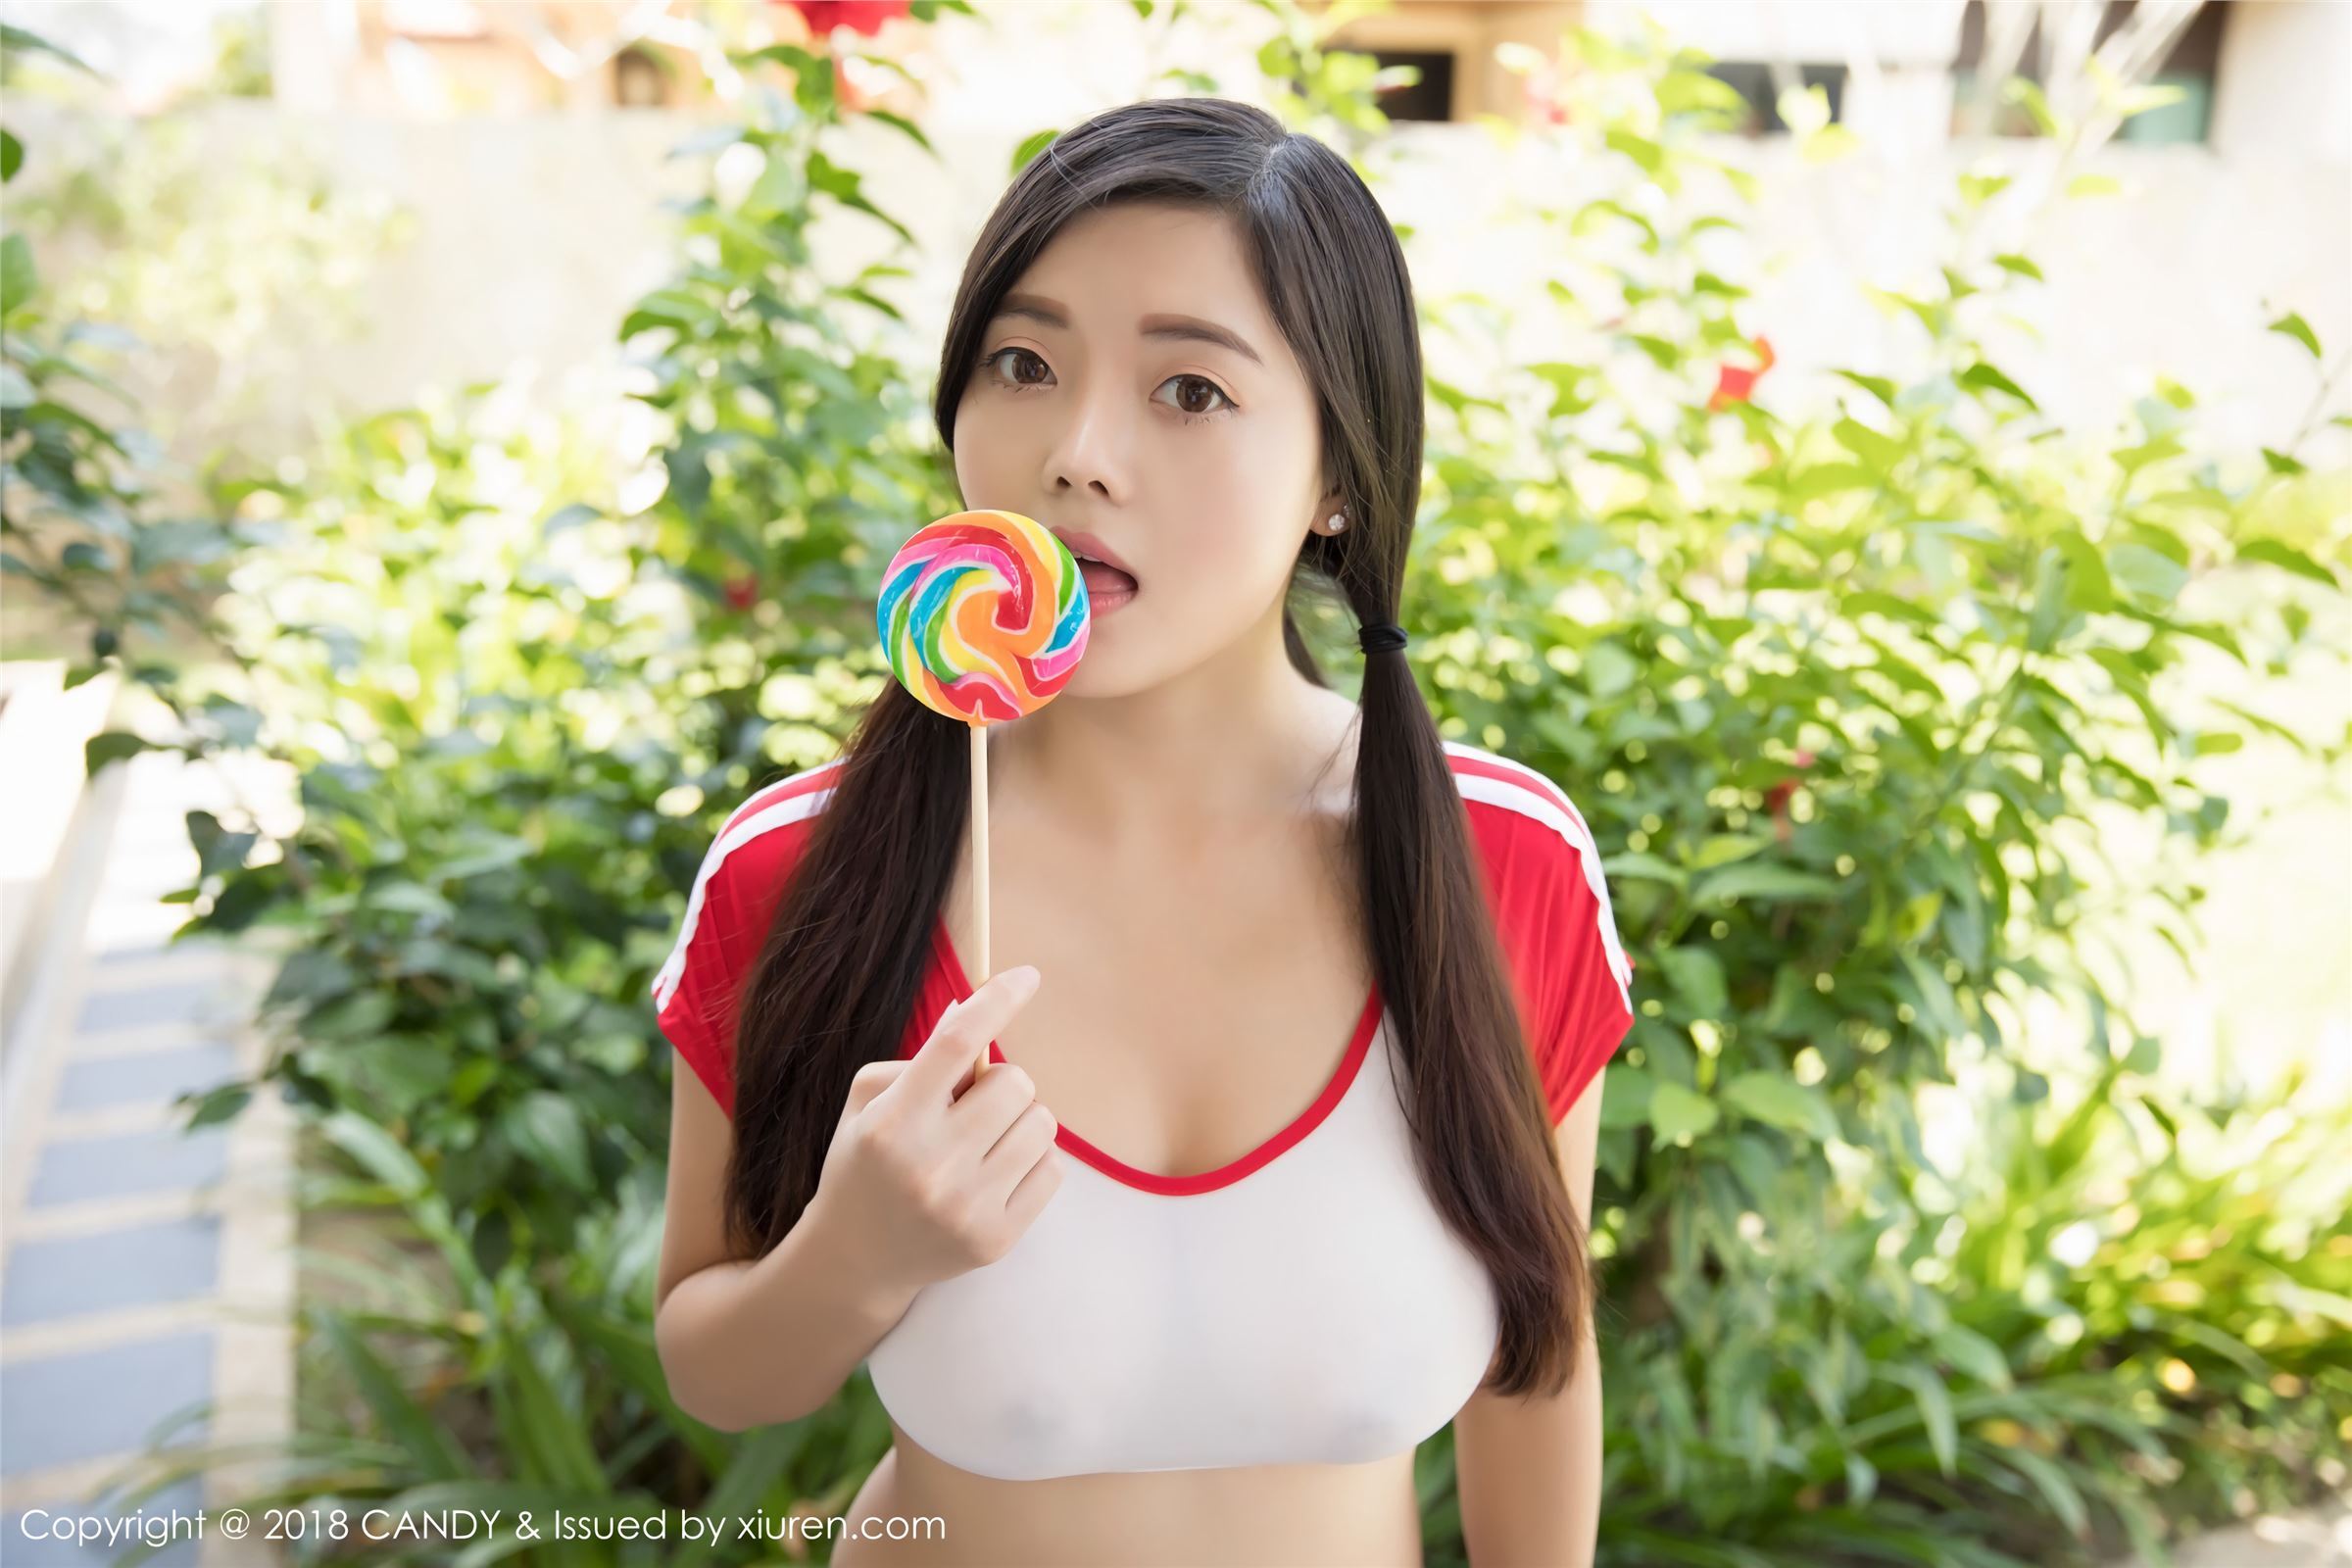 [candy] candy pictorial photo 2018.01.31 Vol.050 her underwear Lin MEIHUIZI Mieko